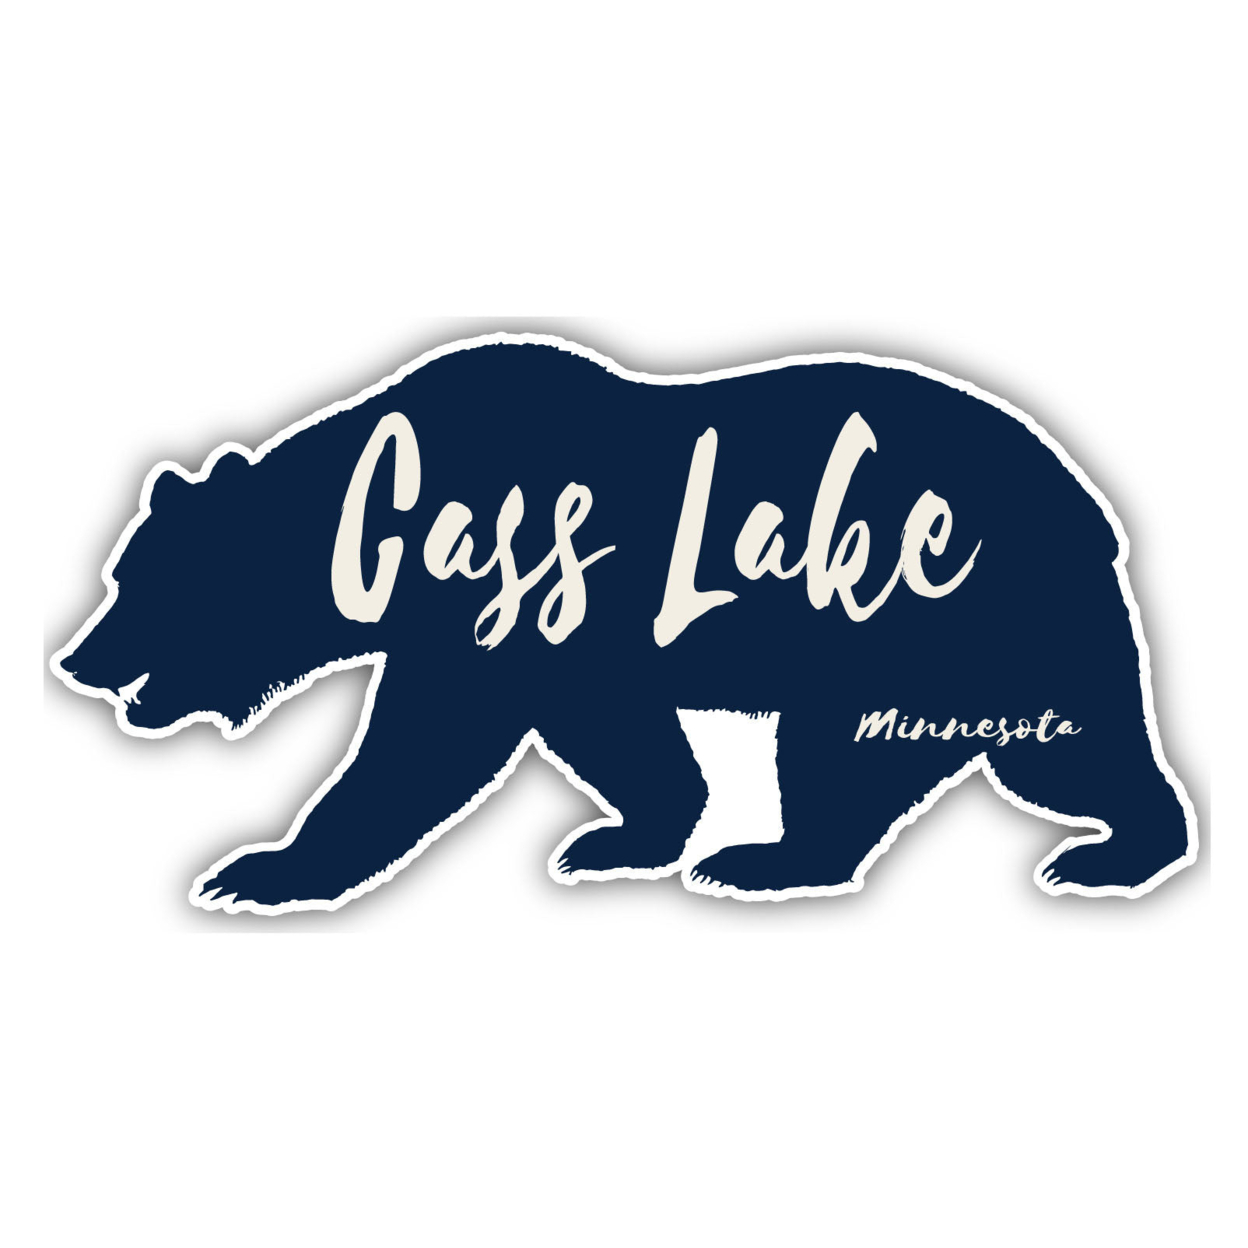 Cass Lake Minnesota Souvenir Decorative Stickers (Choose Theme And Size) - 4-Pack, 12-Inch, Bear